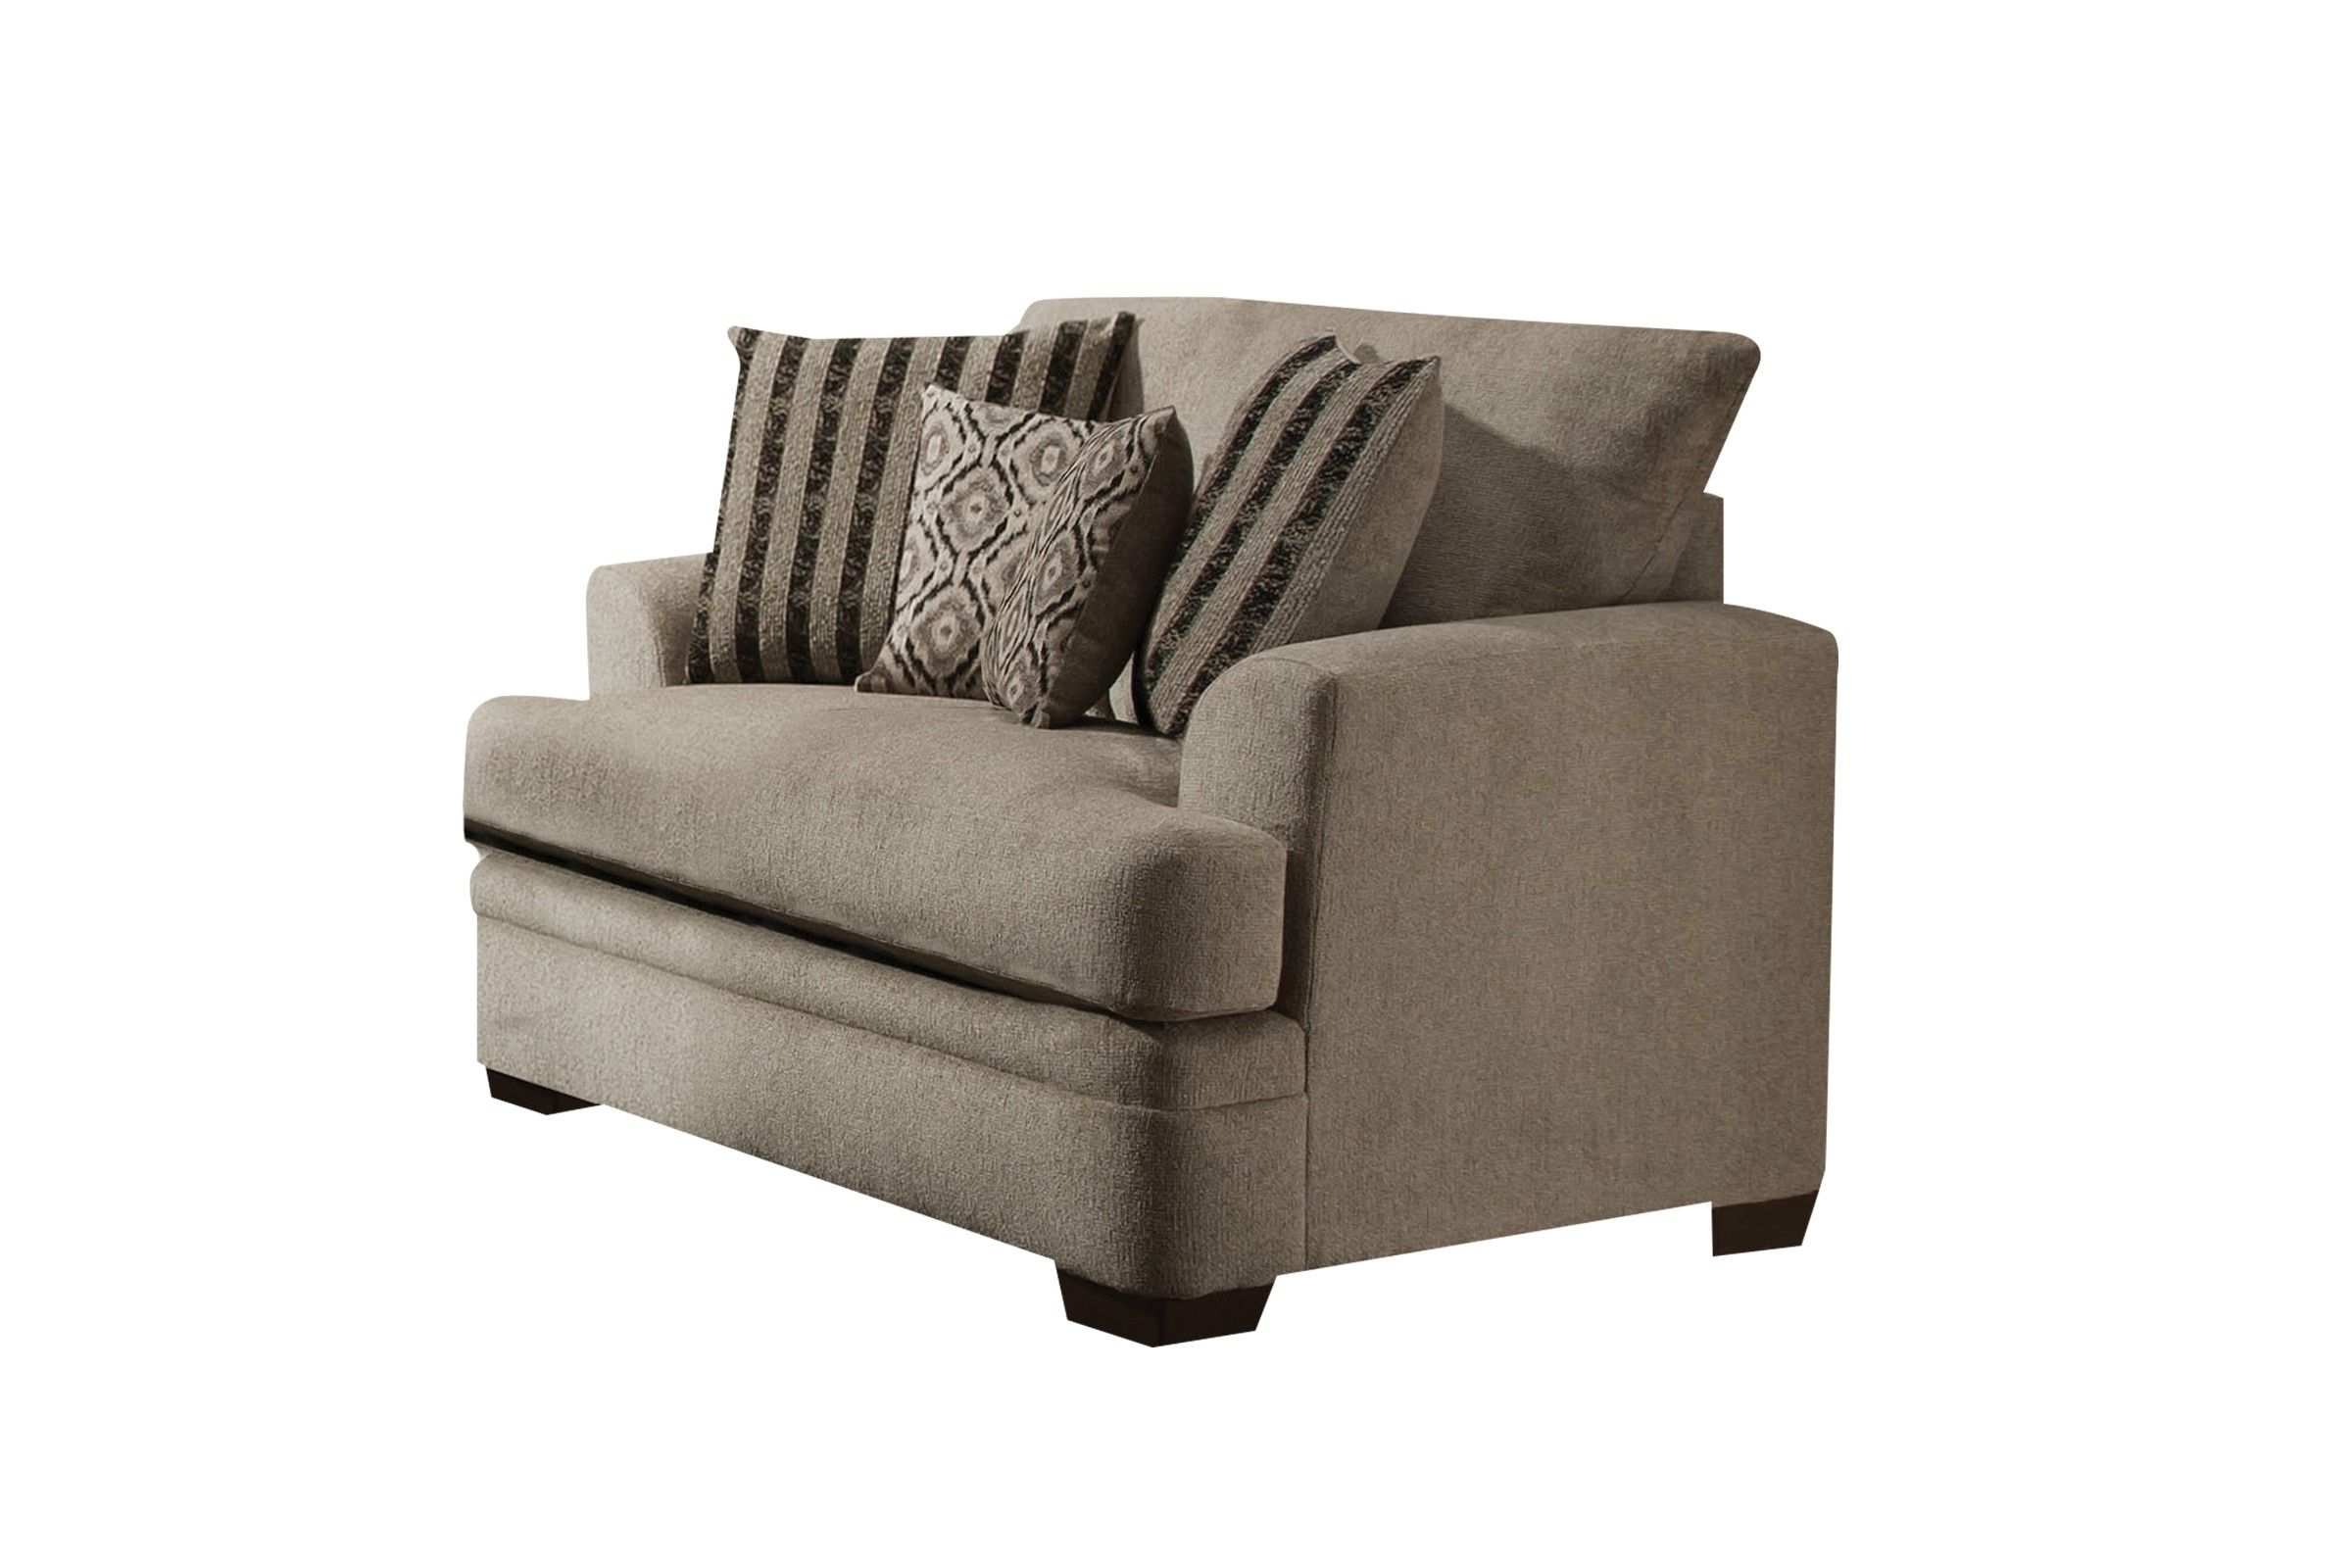 Famous Furniture : Natuzzi Zeta Chaise Lounge Chairs Chaise Lounge Sofa With Natuzzi Zeta Chaise Lounge Chairs (View 9 of 15)